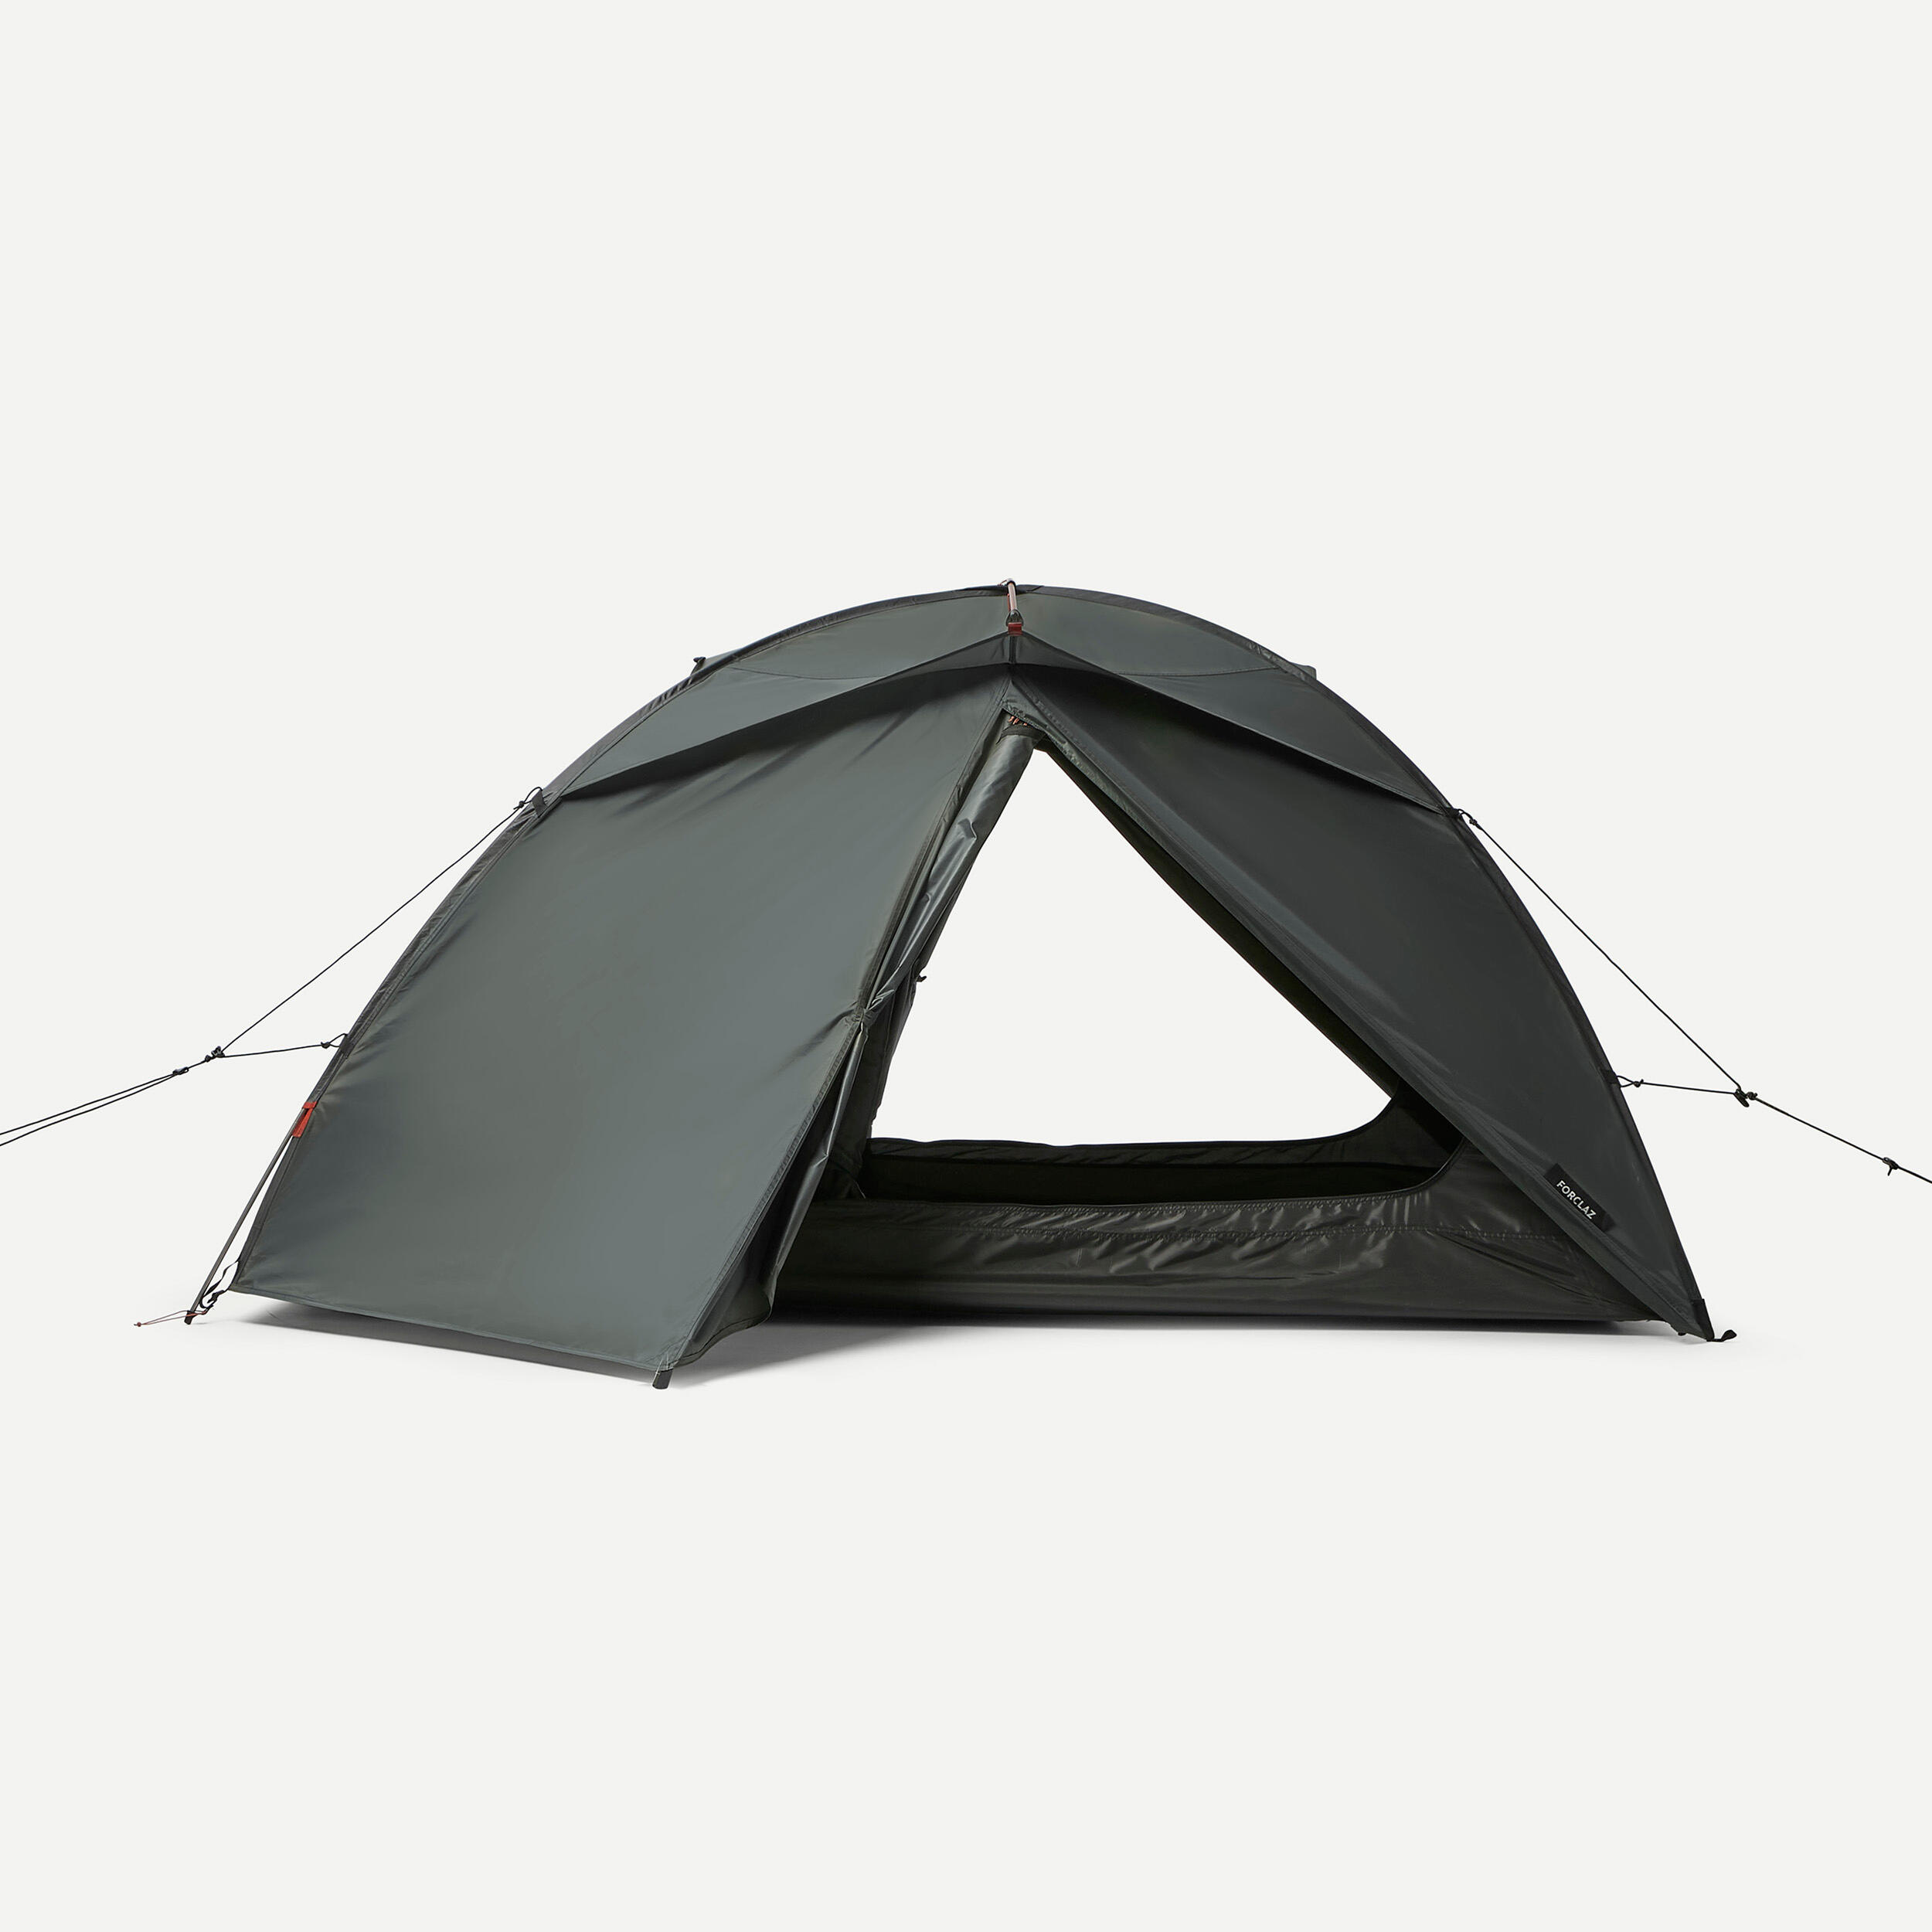 Trekking dome tent - 2-person - MT500 3/7